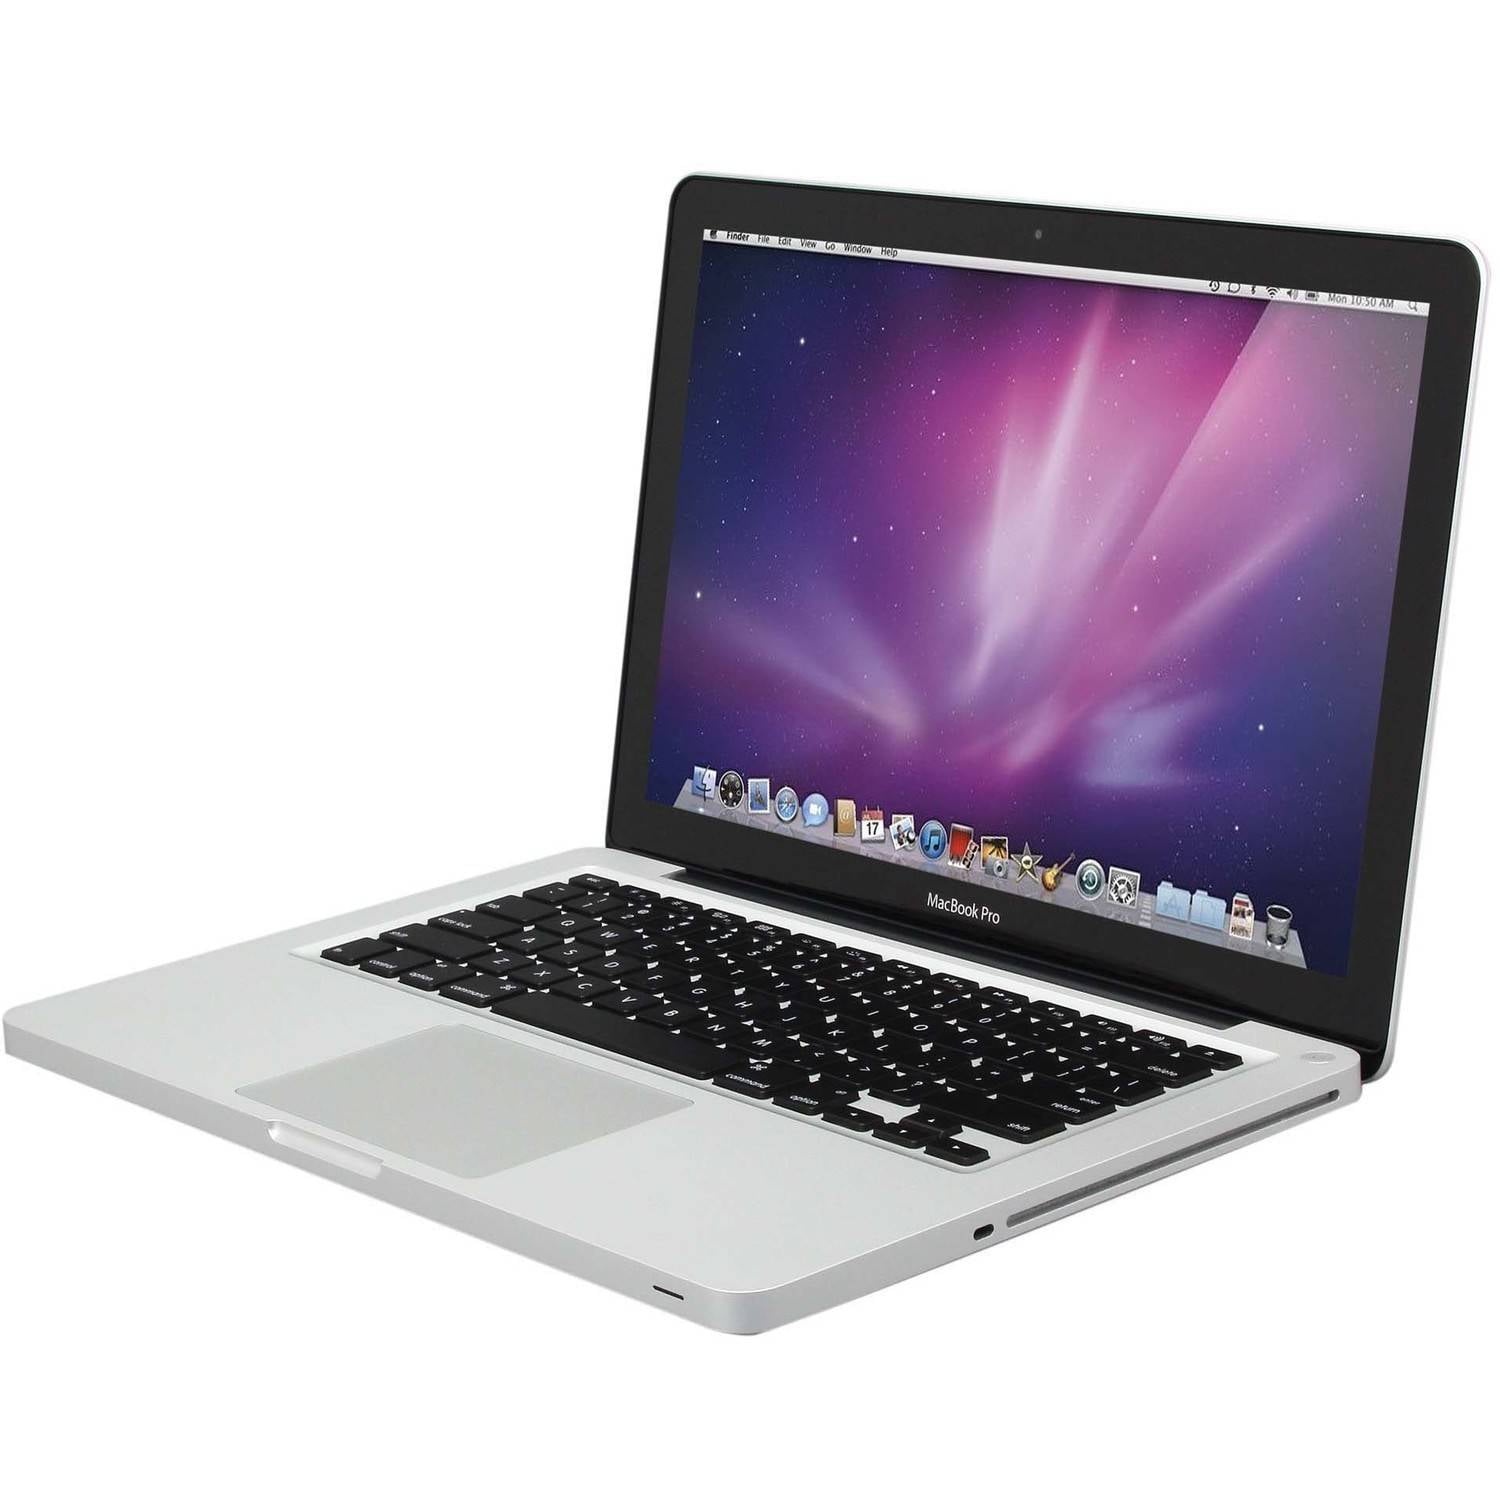 macbook pro i5 2.53 review